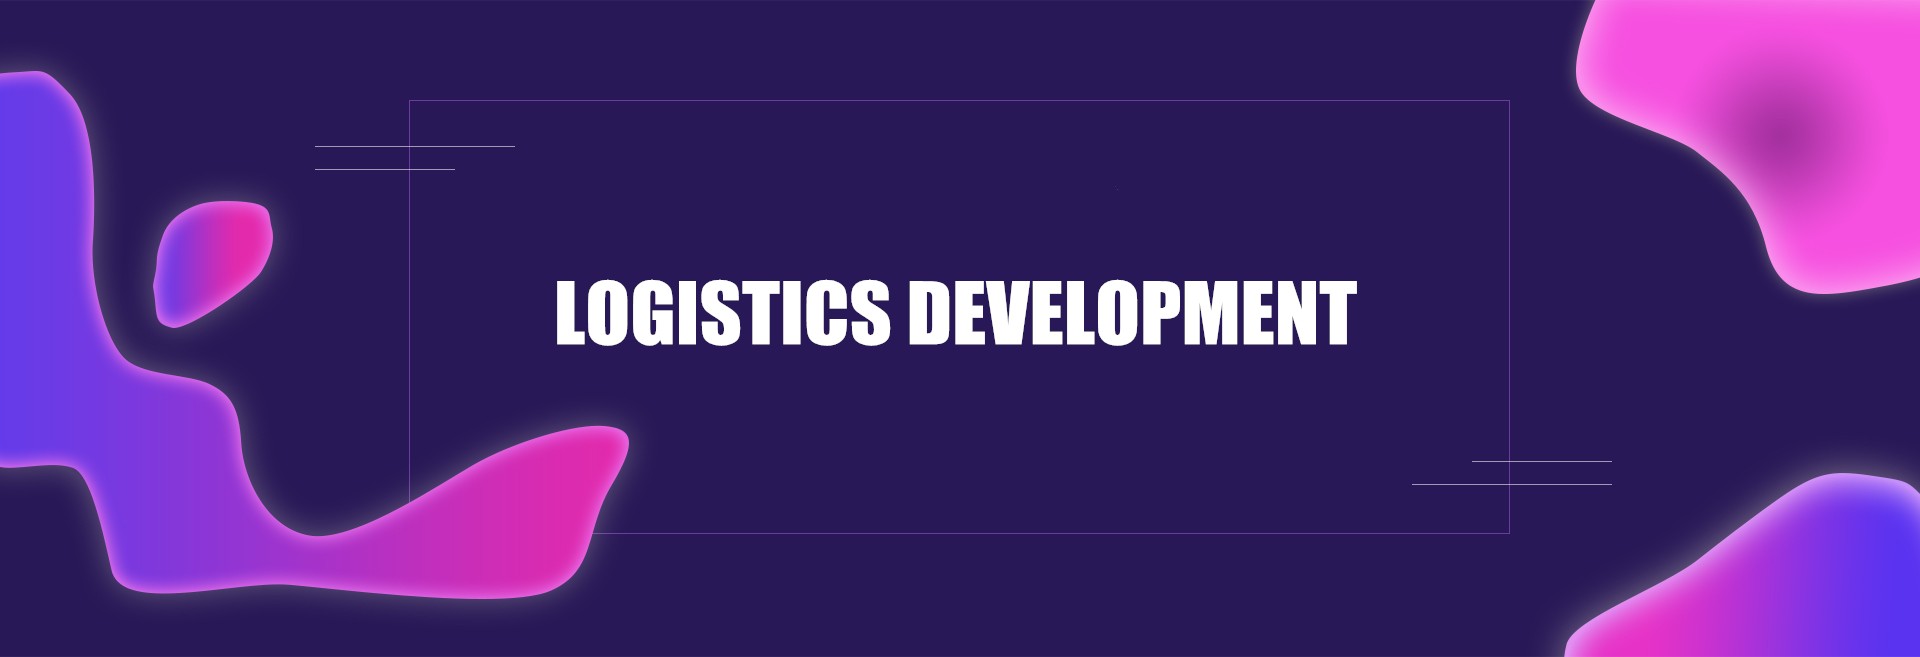 logistics development.jpg